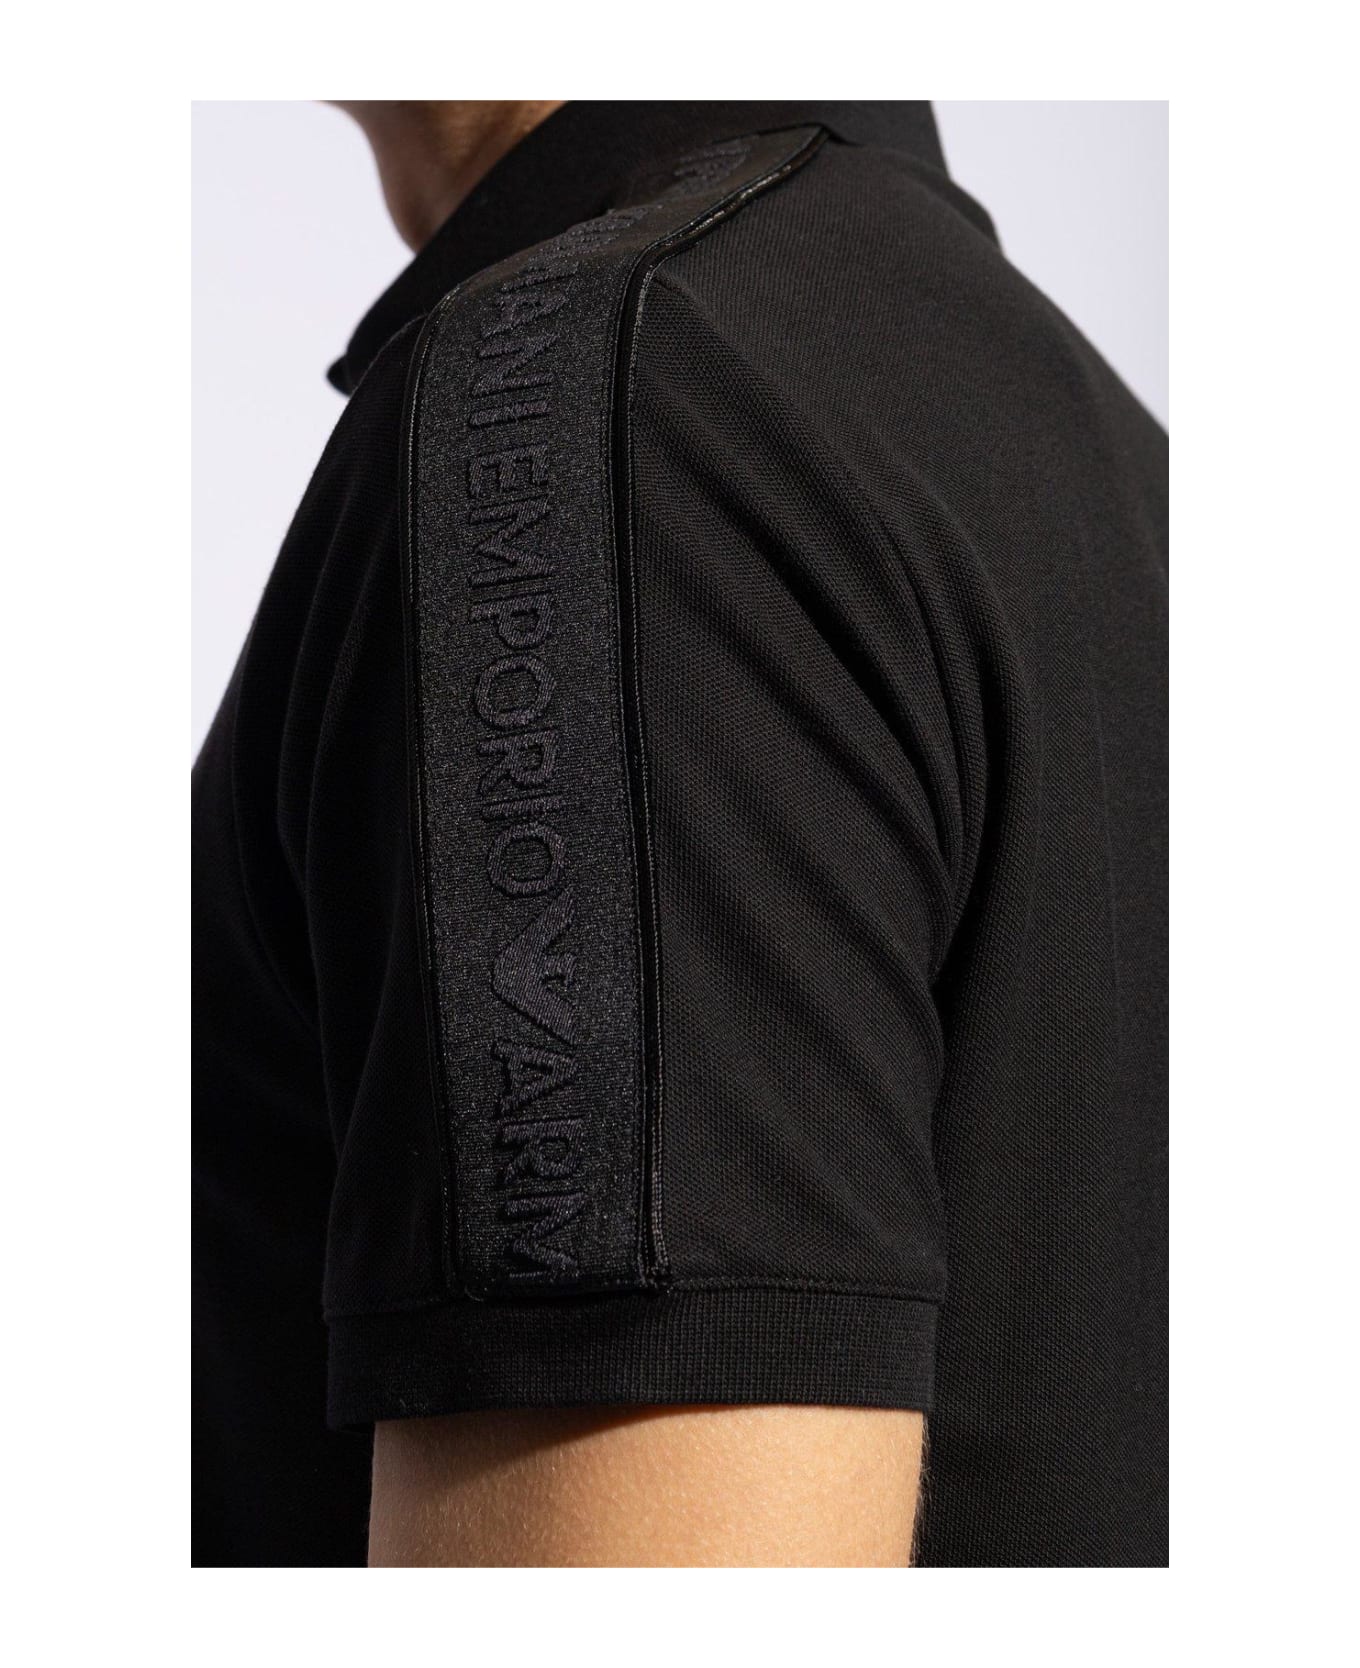 Emporio Armani Cotton Polo Shirt - Black シャツ